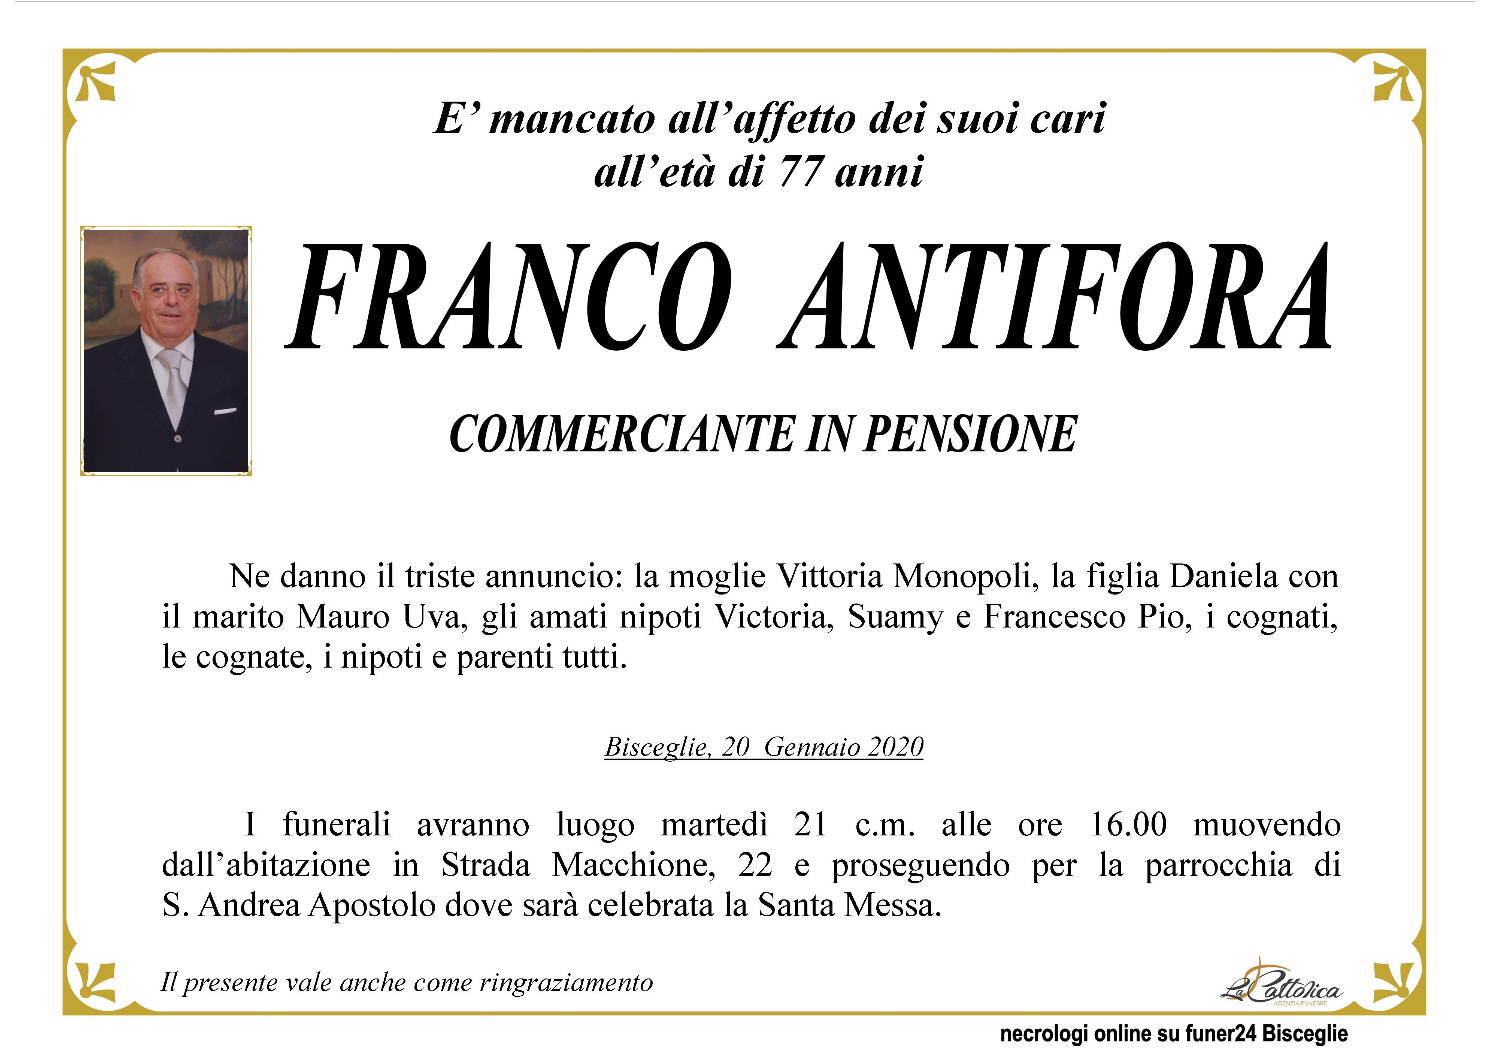 Francesco Antifora